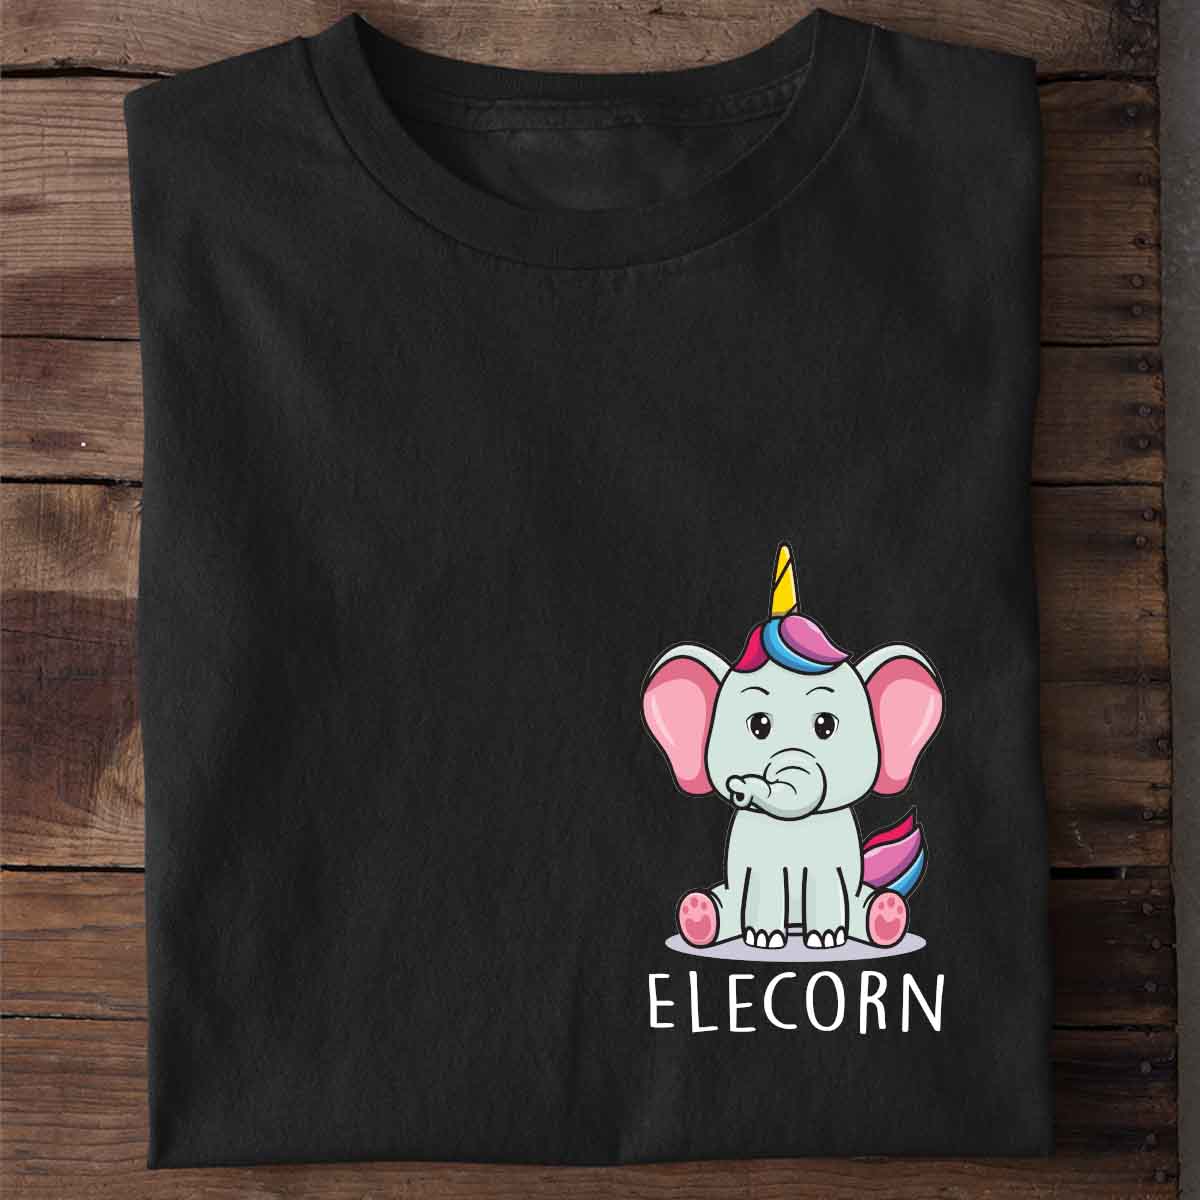 Elecorn - Shirt Unisex Chest